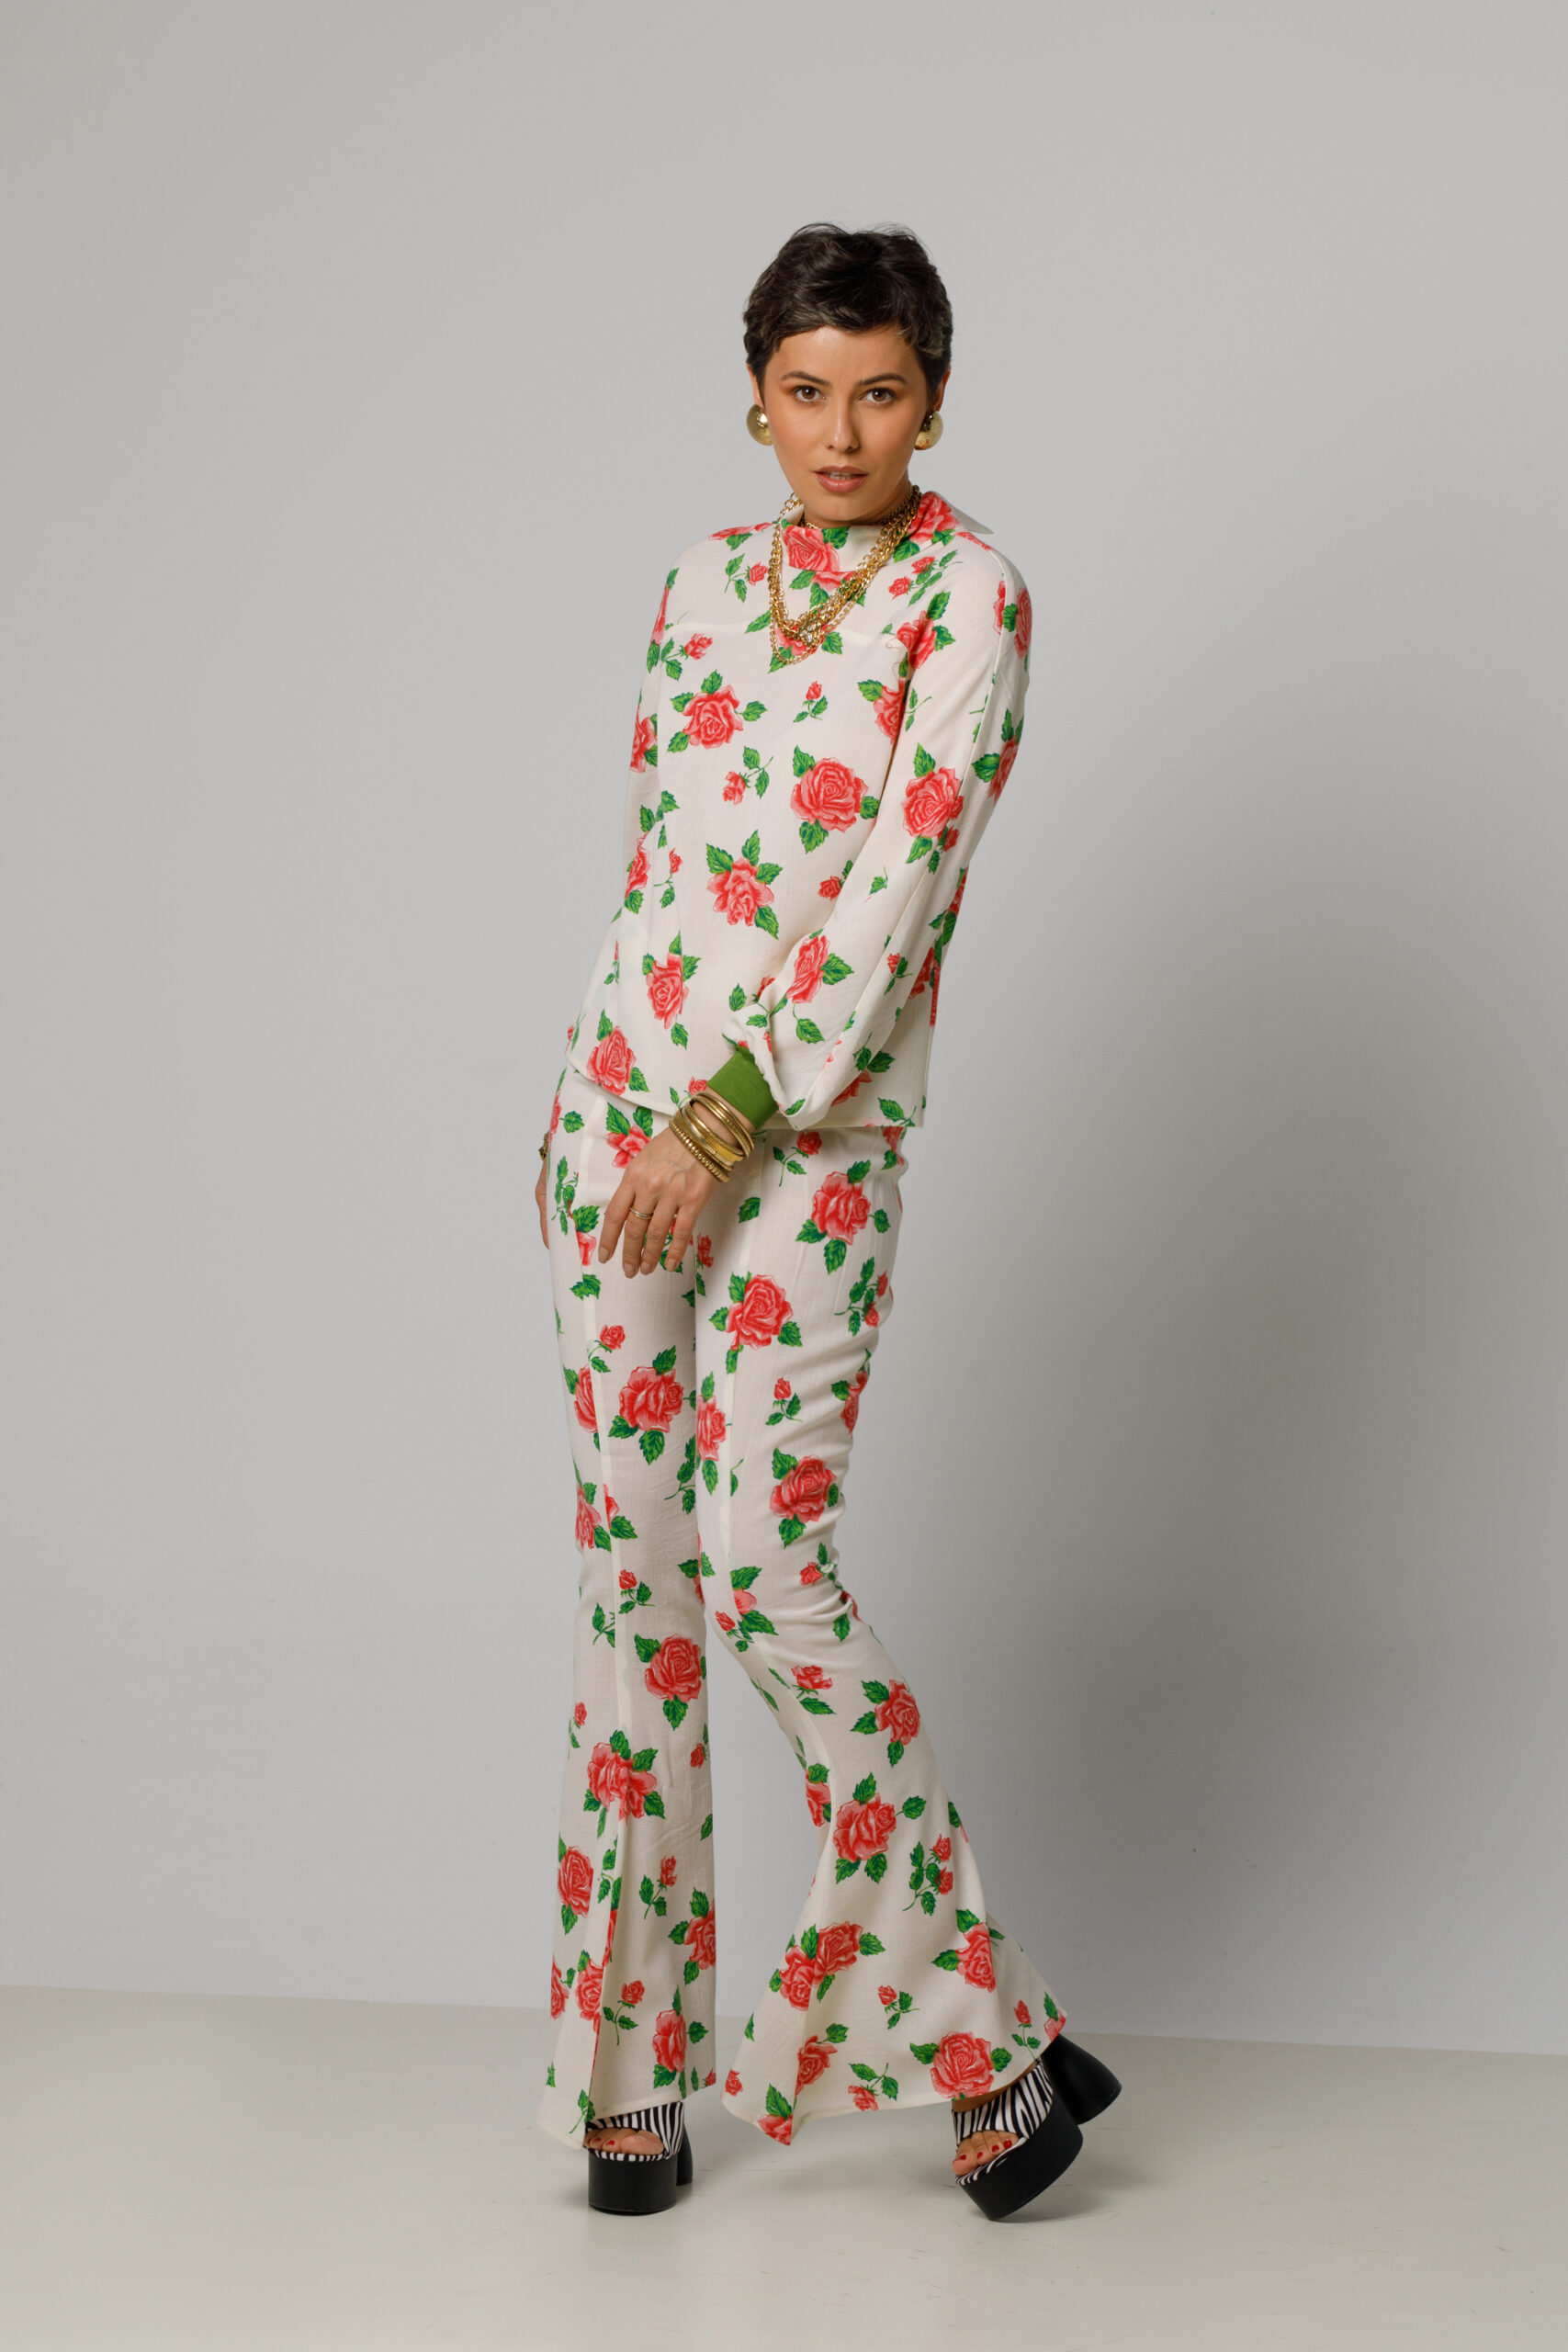 ERWIN casual floral poplin blouse. Natural fabrics, original design, handmade embroidery